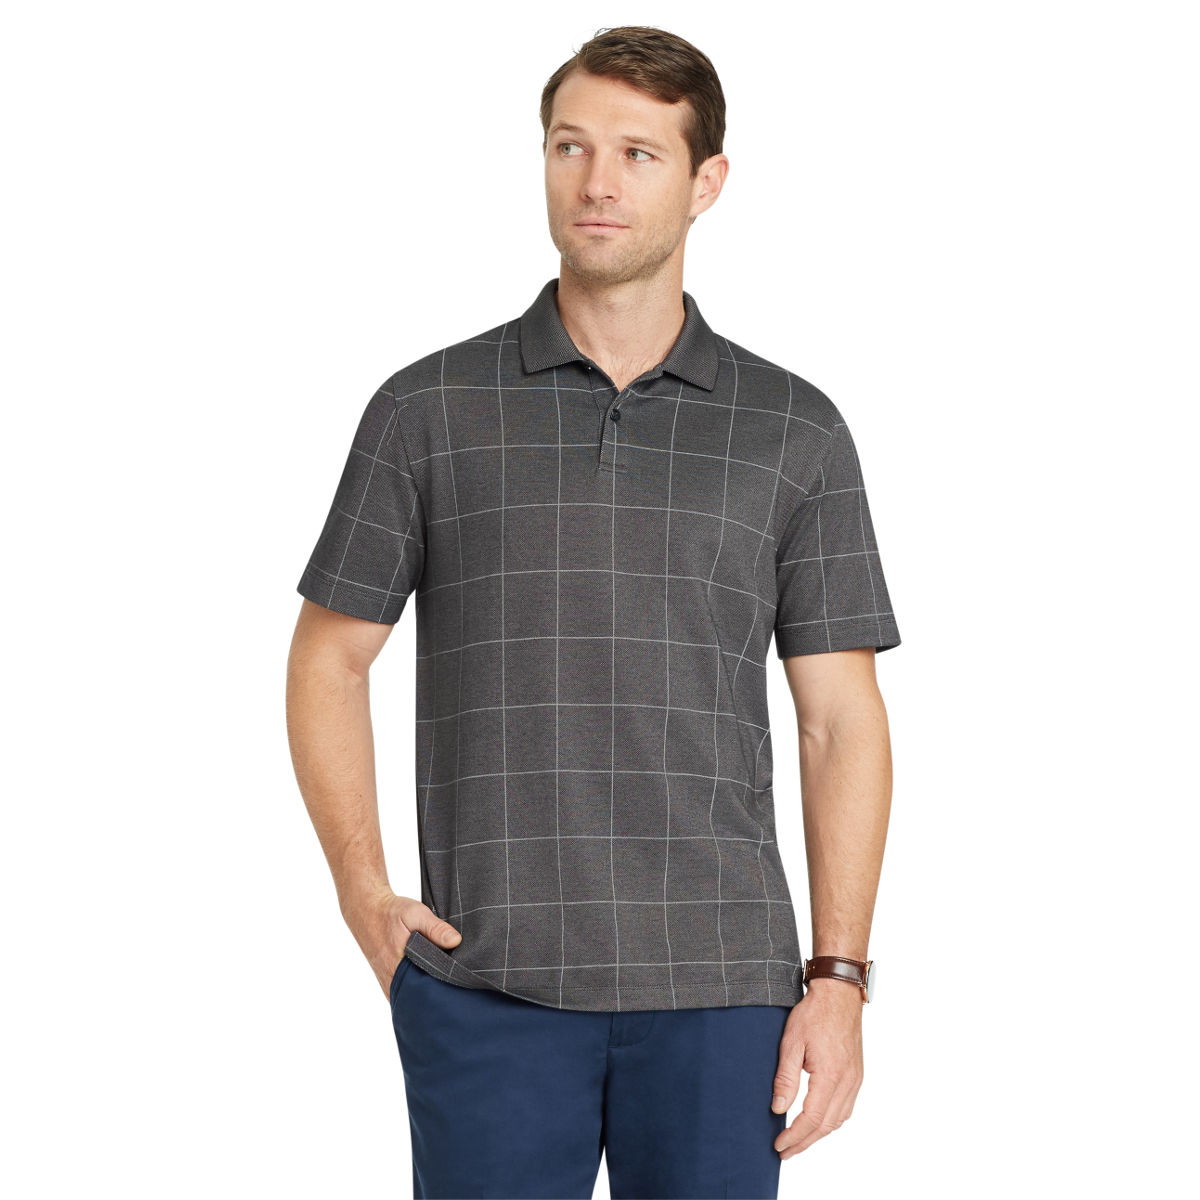 Van Heusen Men's Flex Print Windowpane Short-Sleeve Polo Shirt - Black, XL